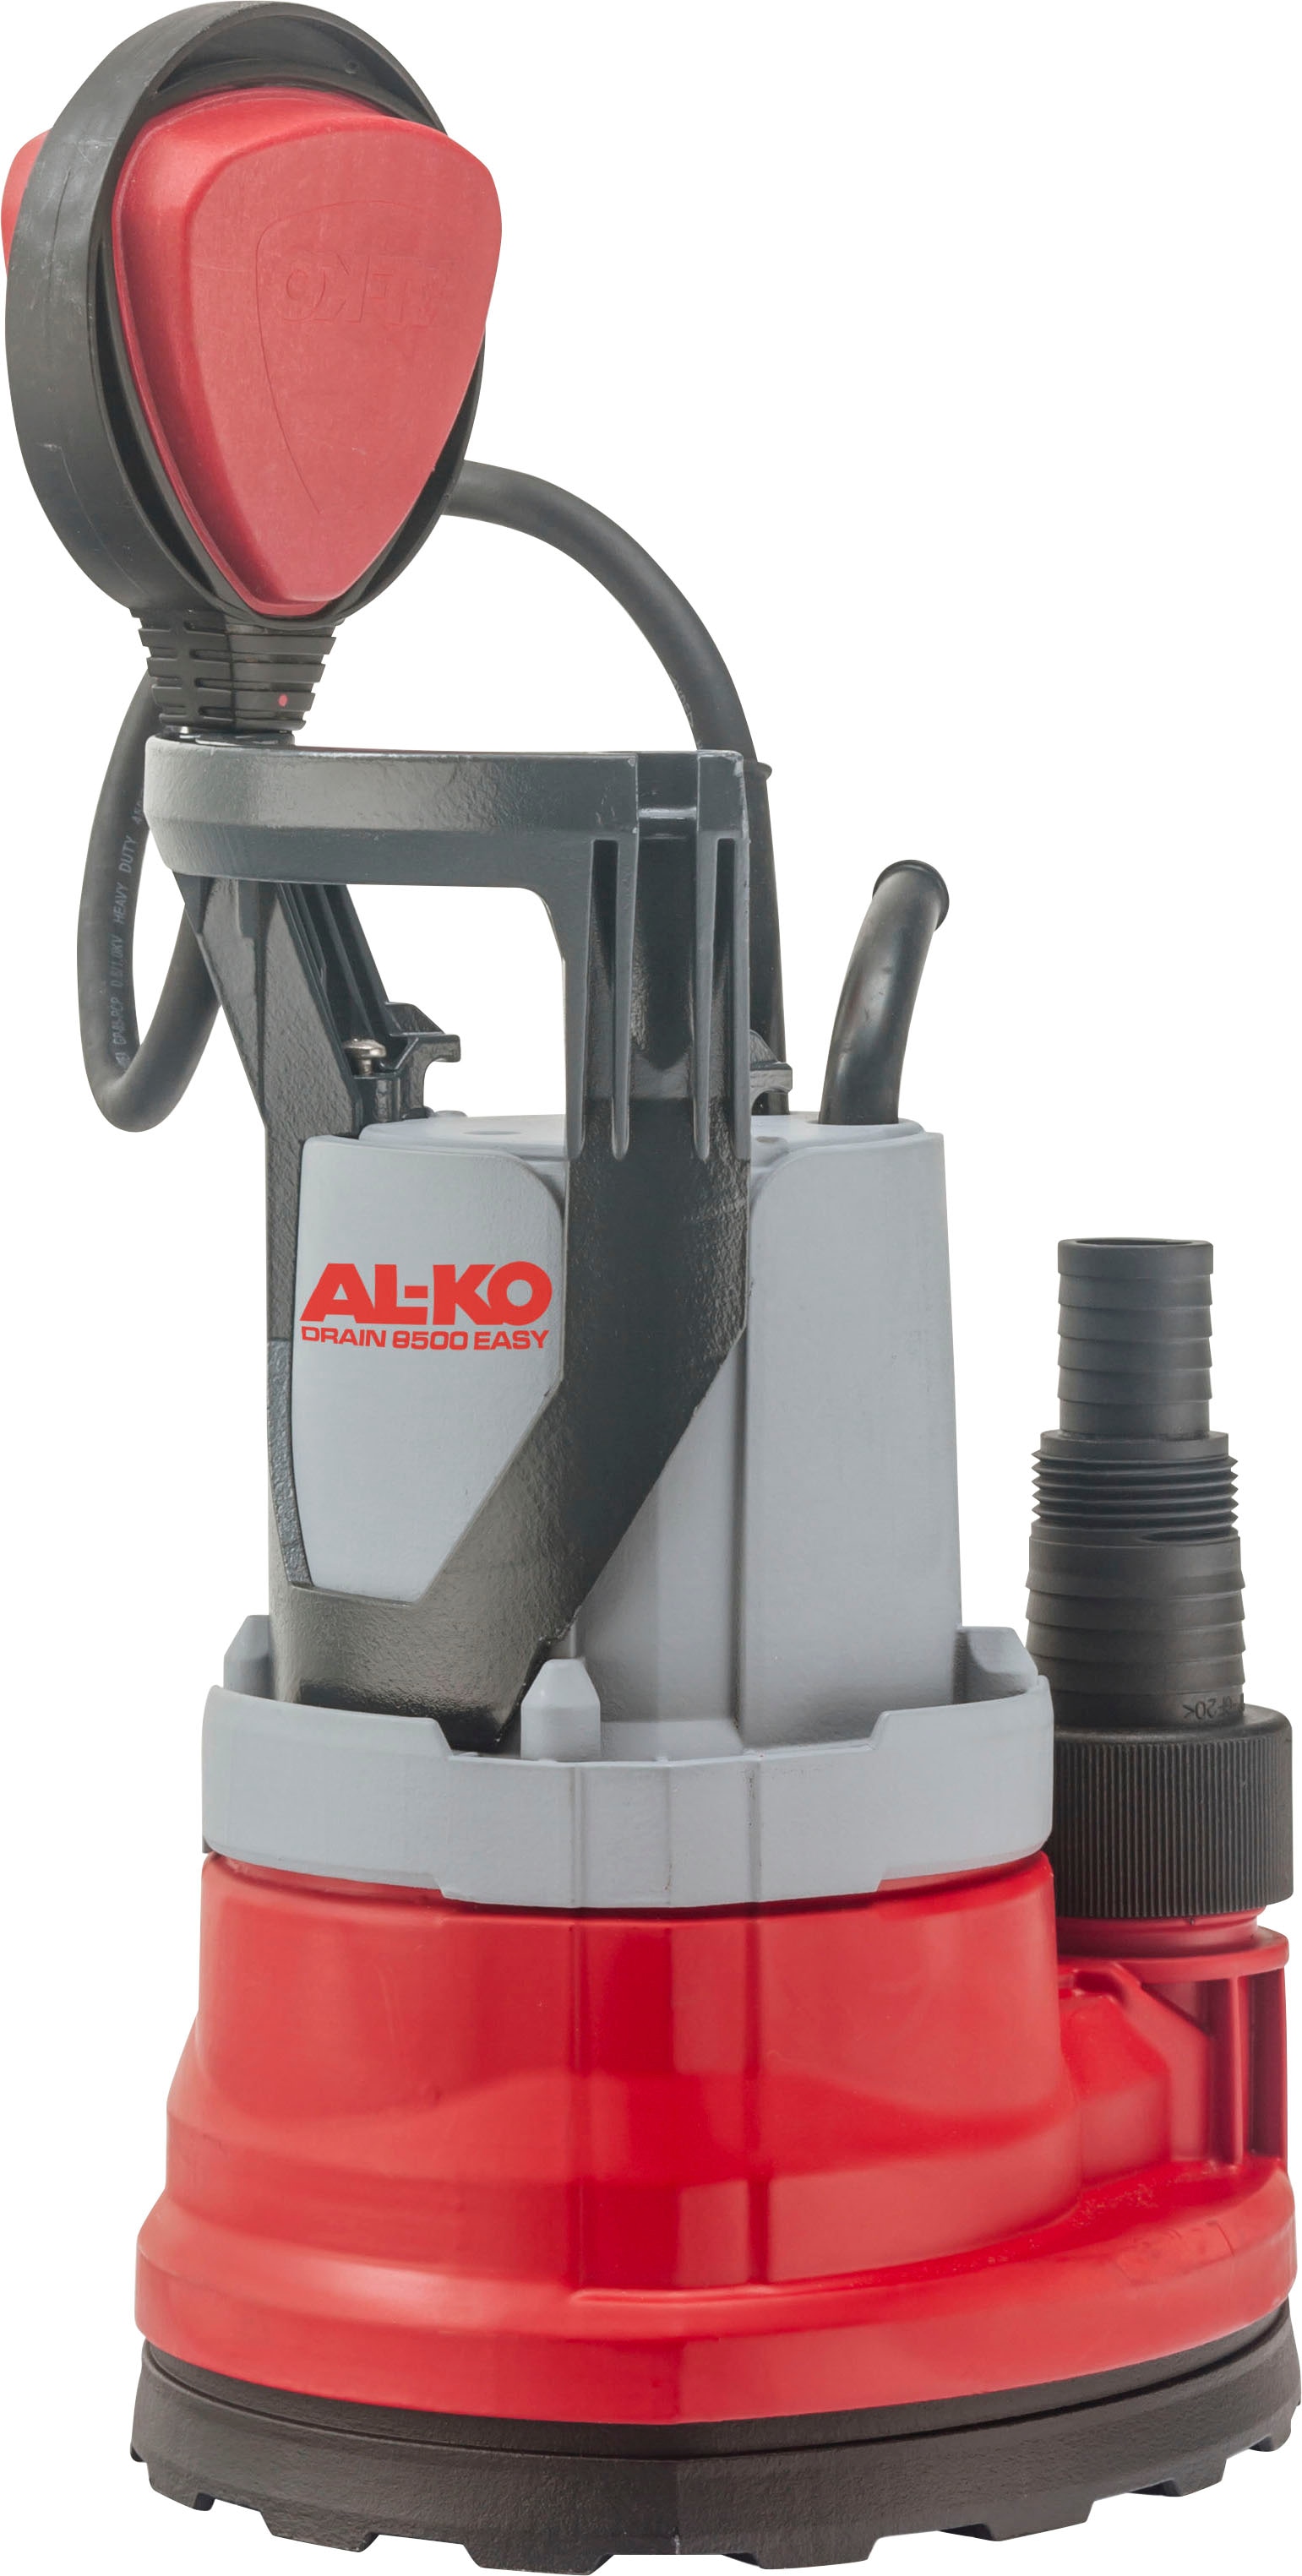 AL-KO Klarwasserpumpe "SUB 8500 Easy", 290 Watt